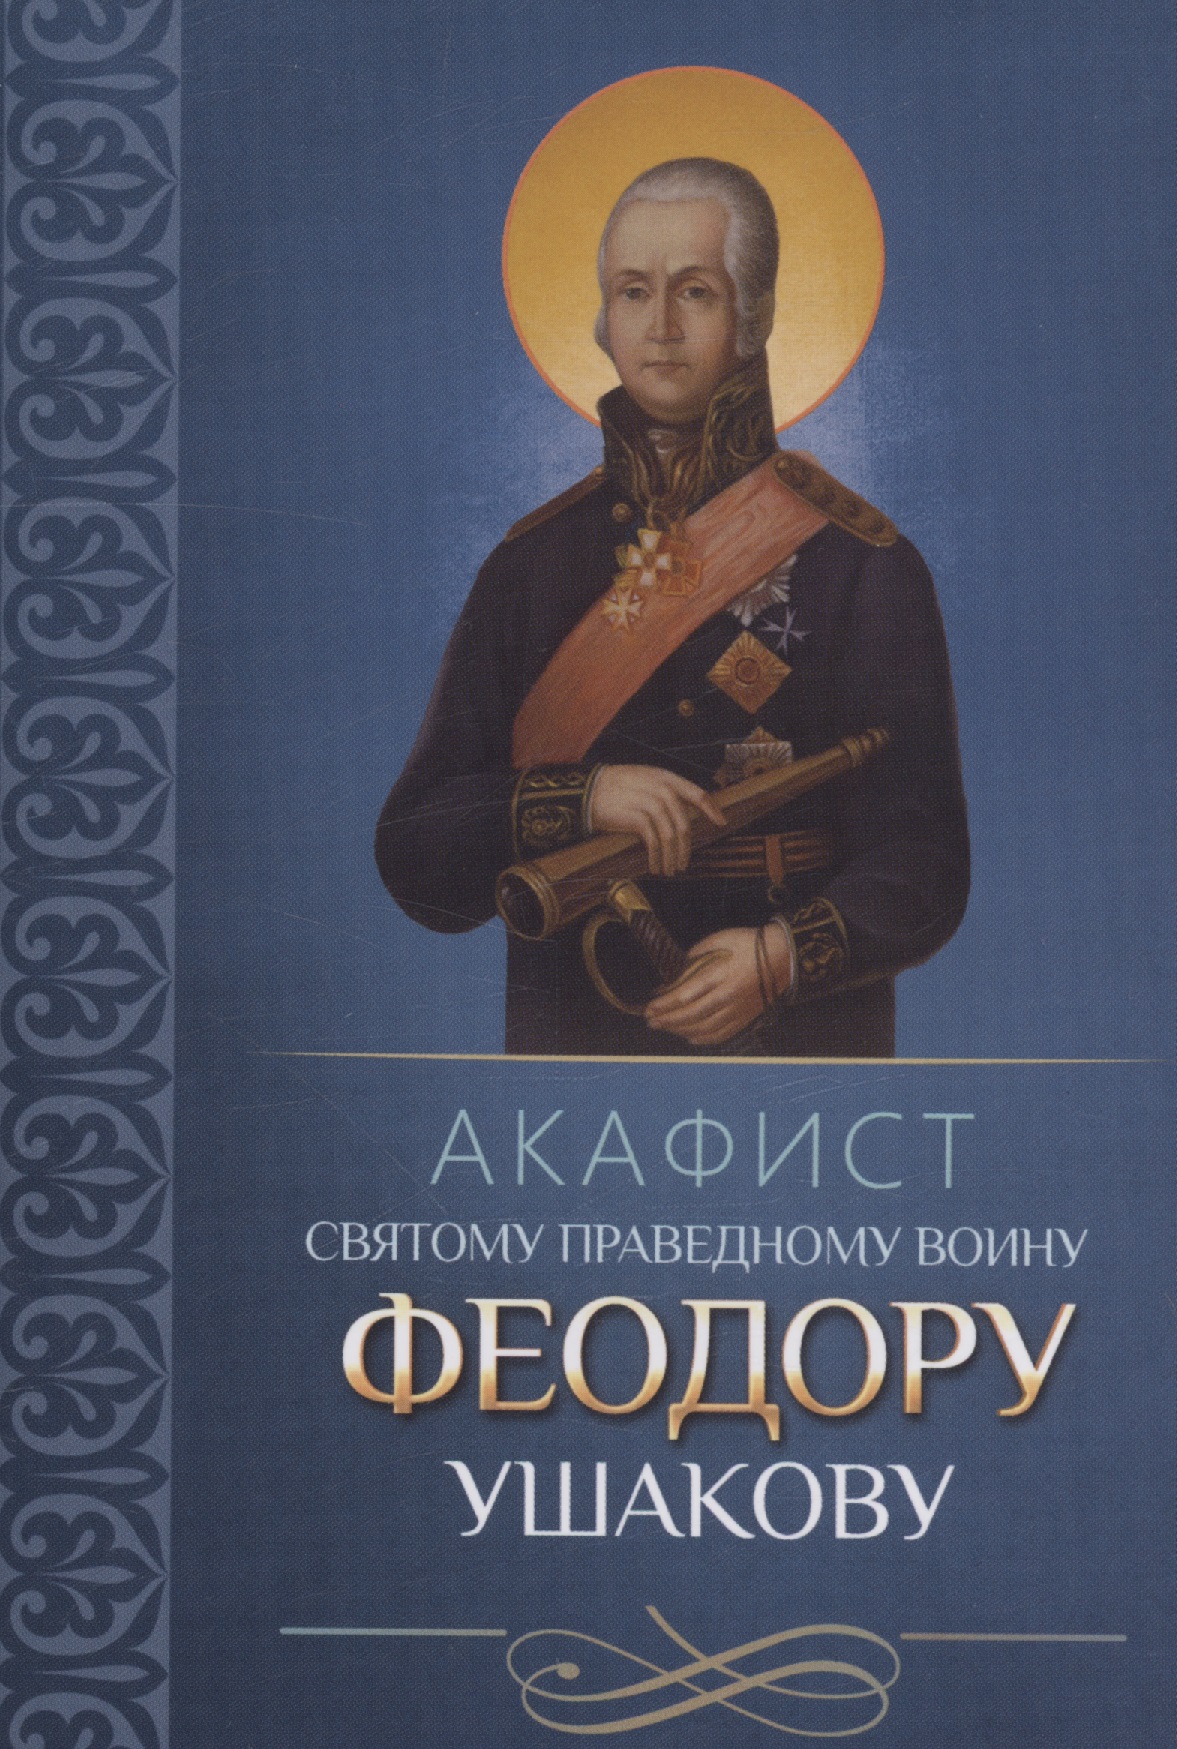 акафист святому праведному иоанну русскому Акафист святому праведному воину Феодору Ушакову